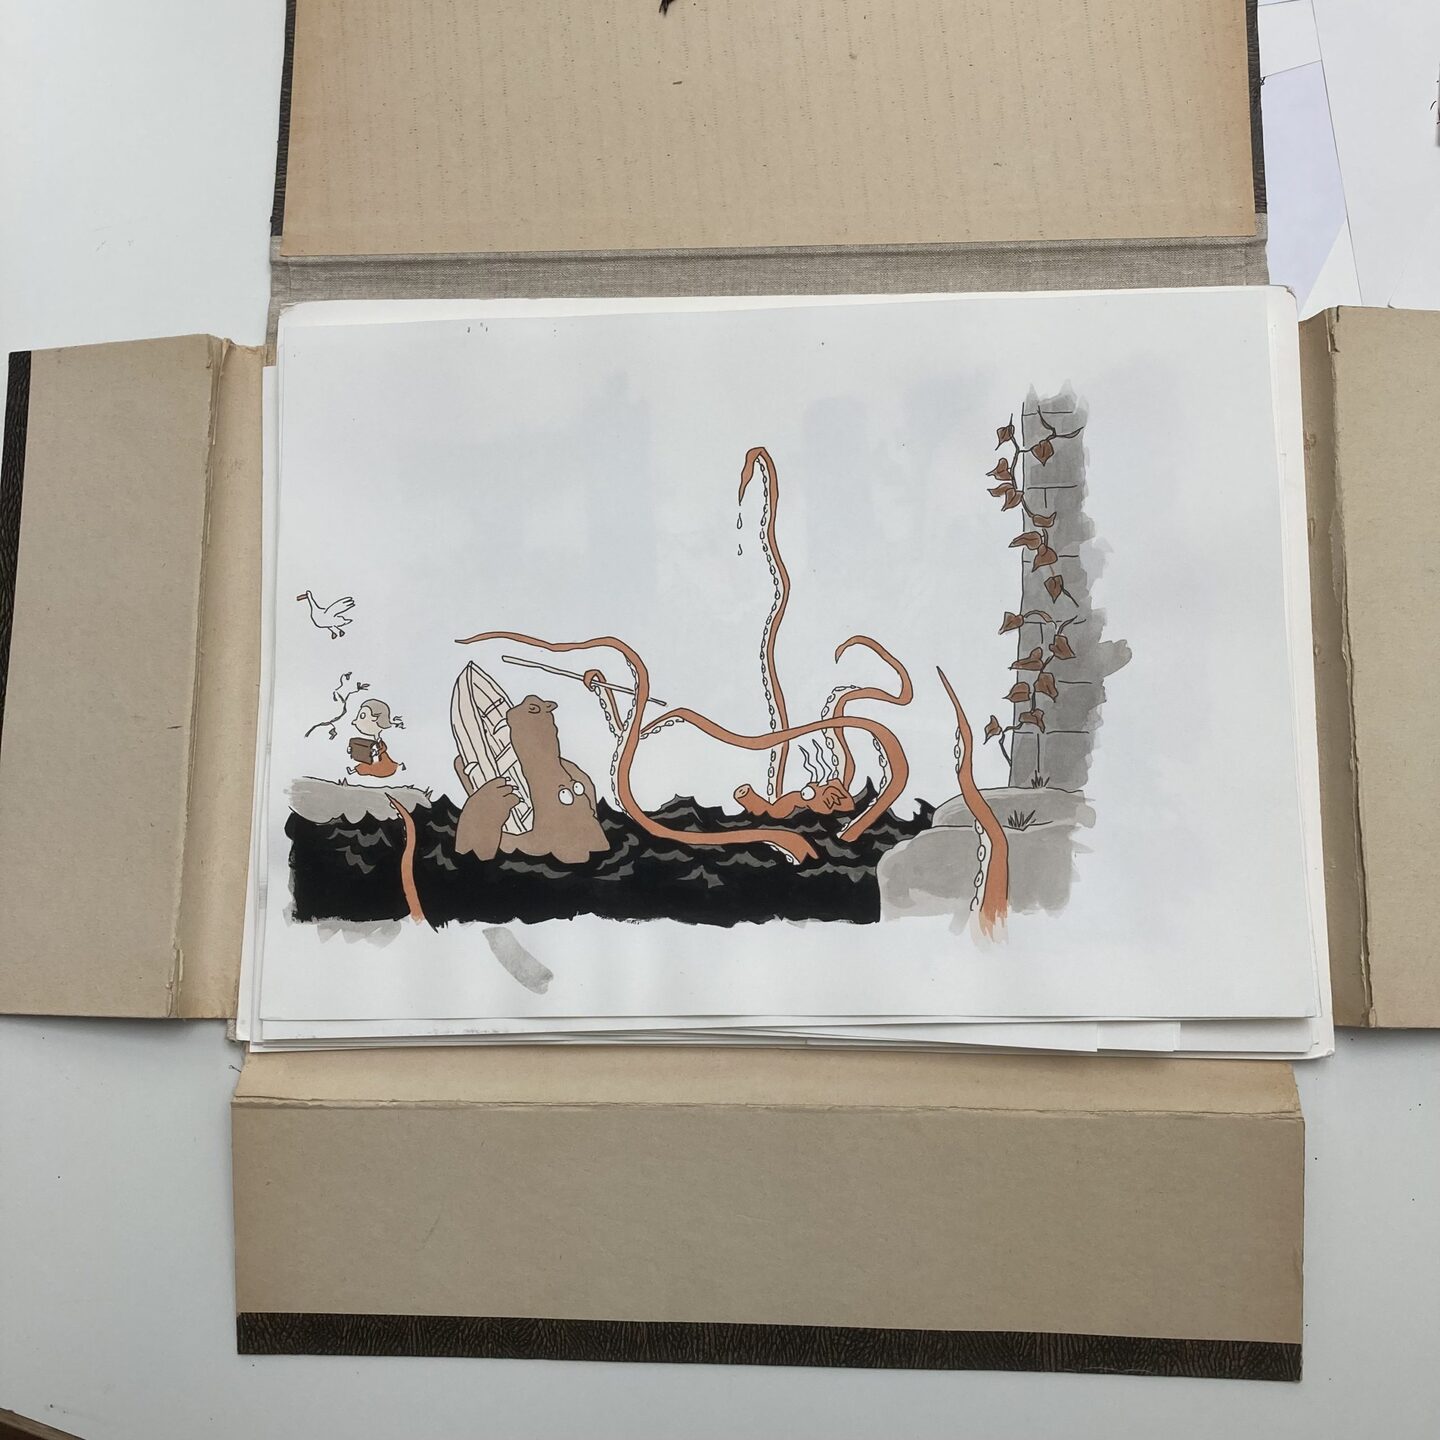 Artwork in box